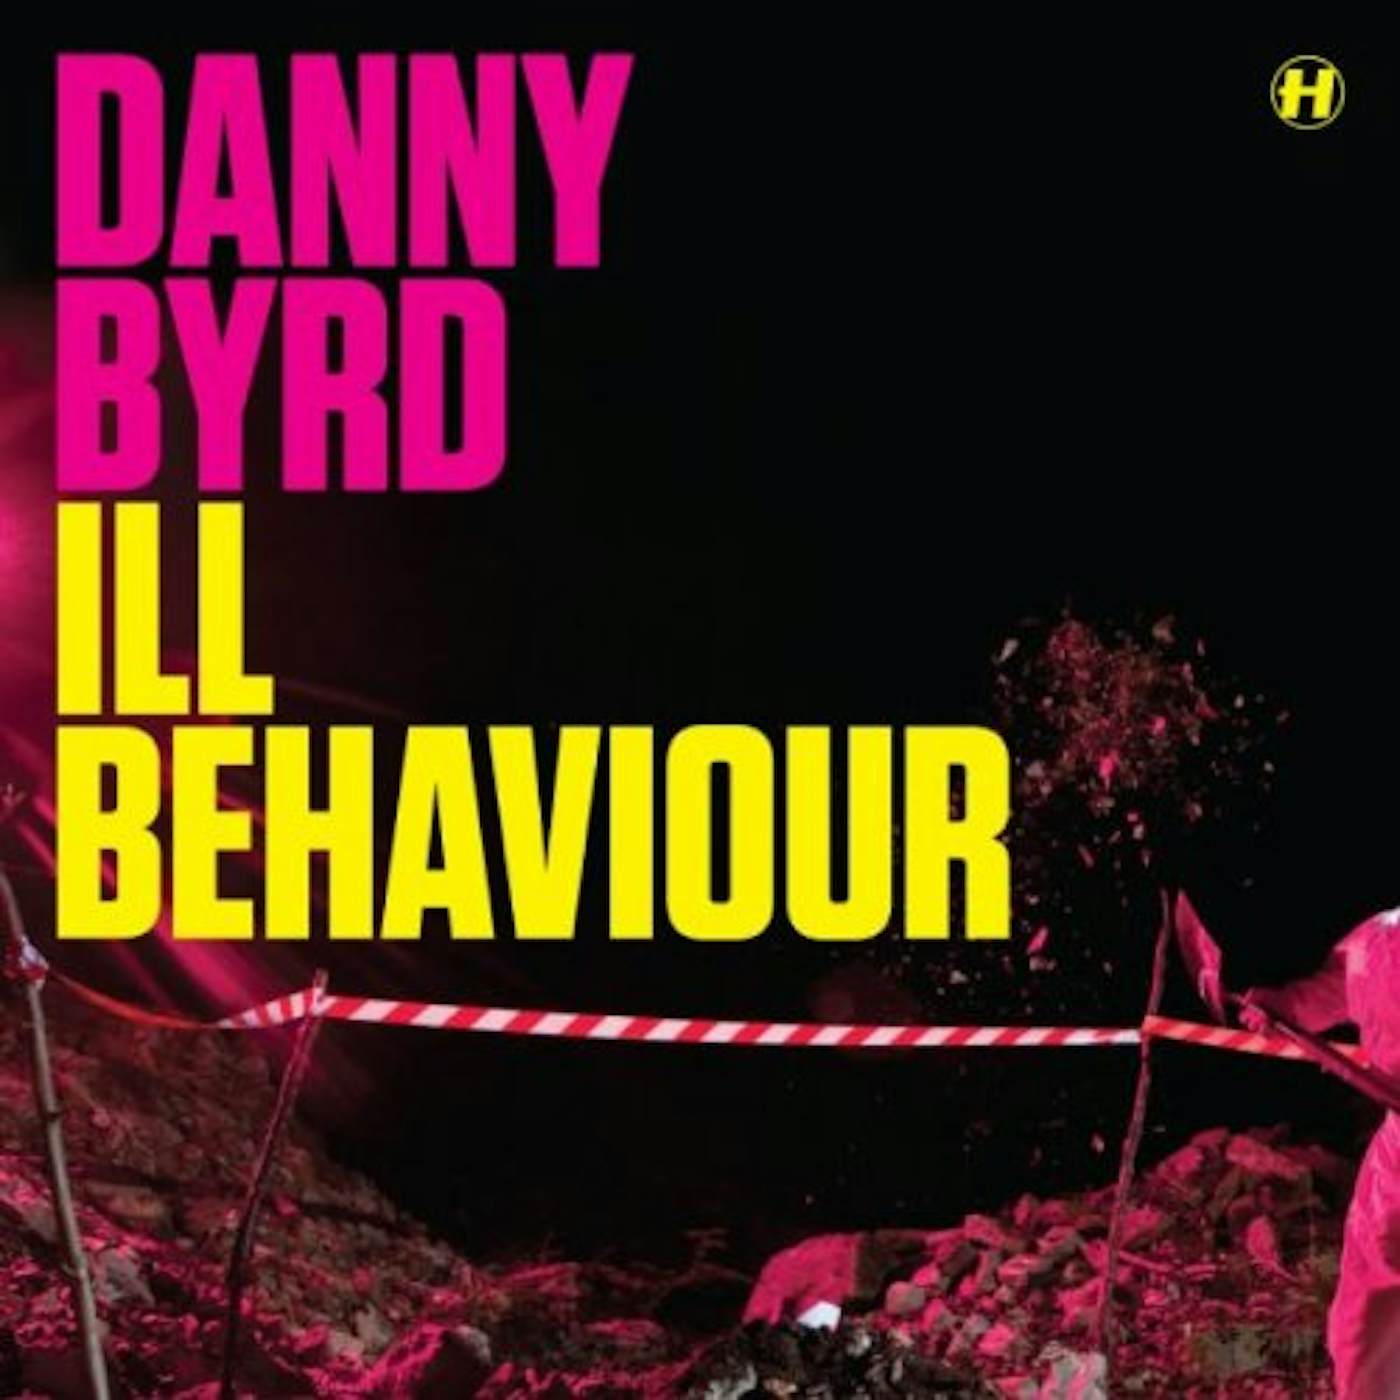 Danny Byrd ILL BEHAVIOUR/MOONWALKER Vinyl Record - UK Release